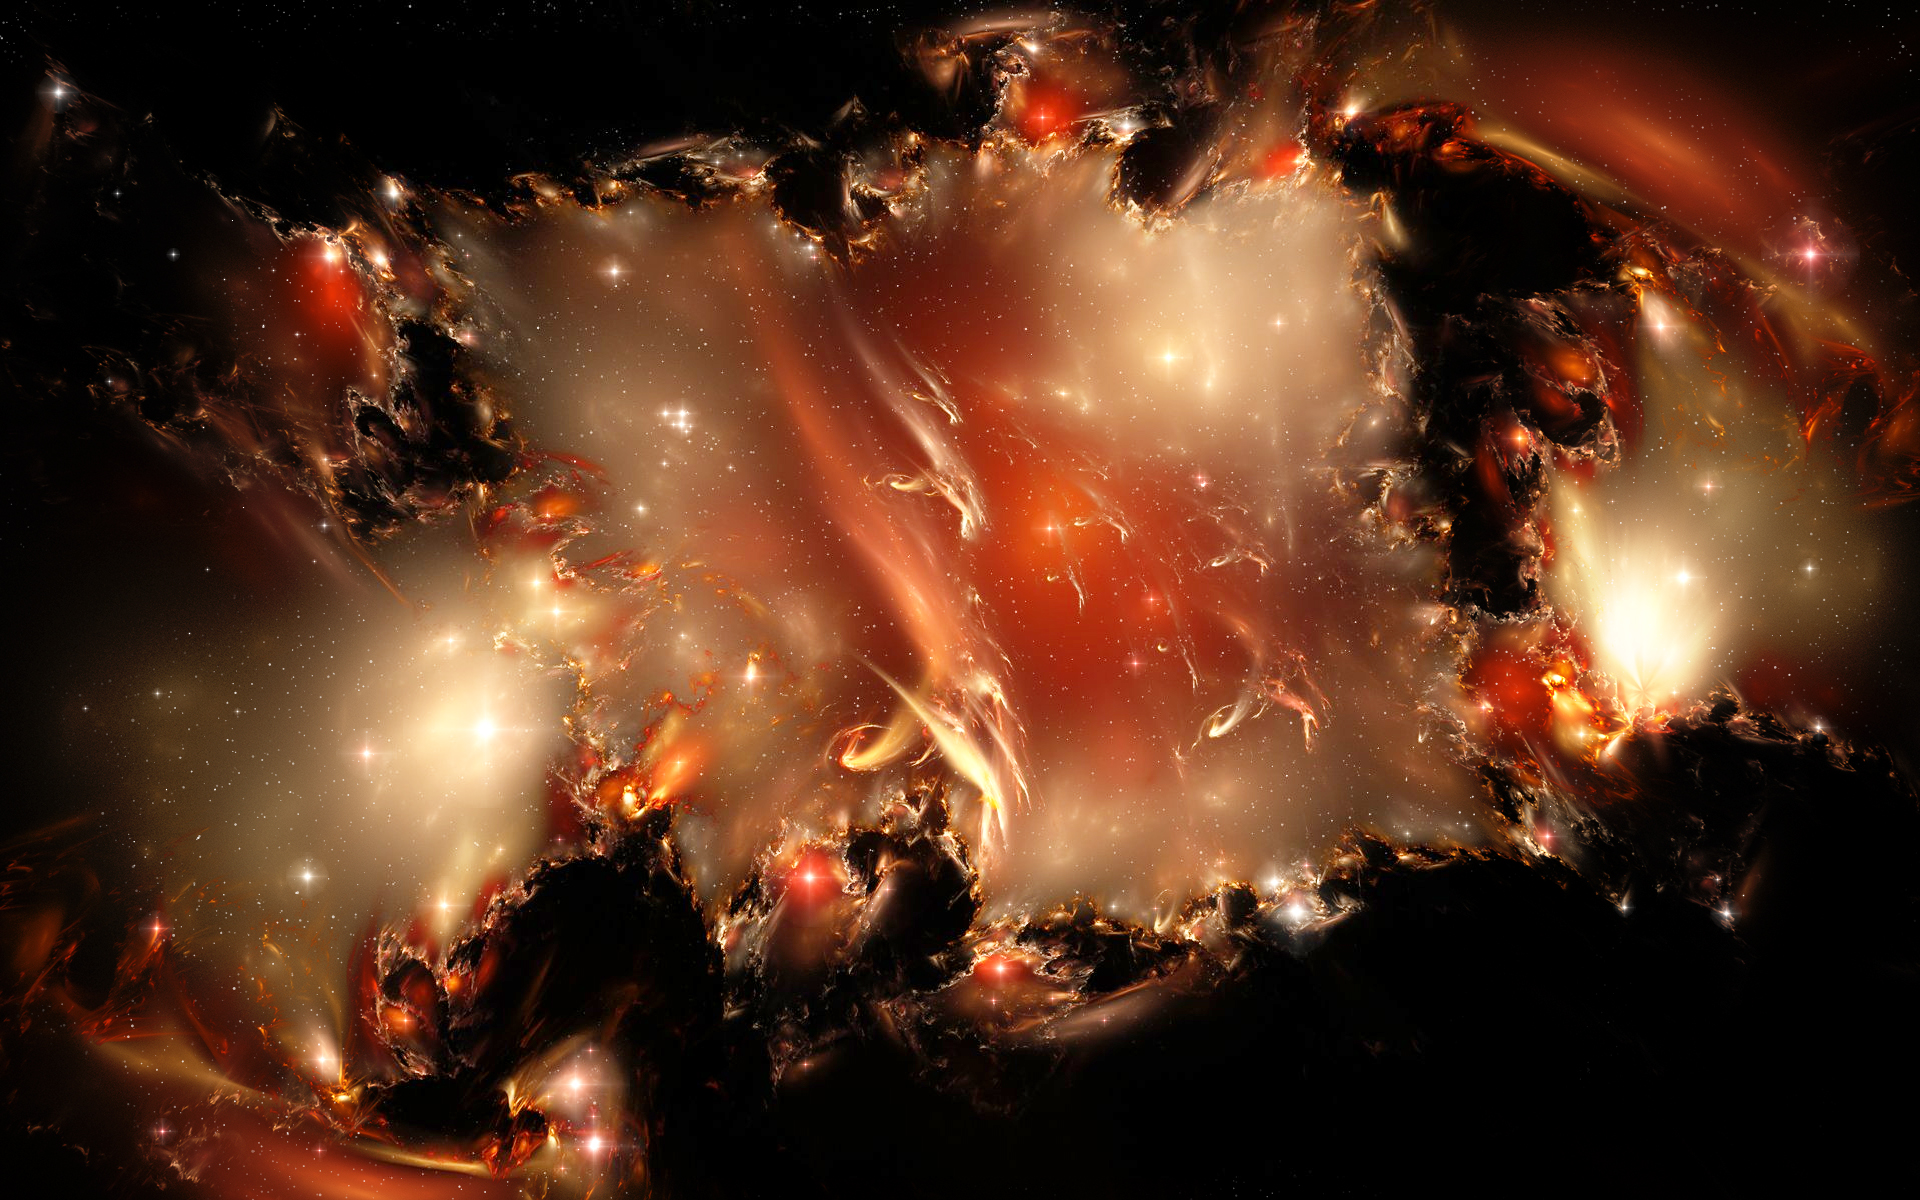 Crazy Nebula Computer Wallpapers, Desktop Backgrounds | 1.49 MB ...